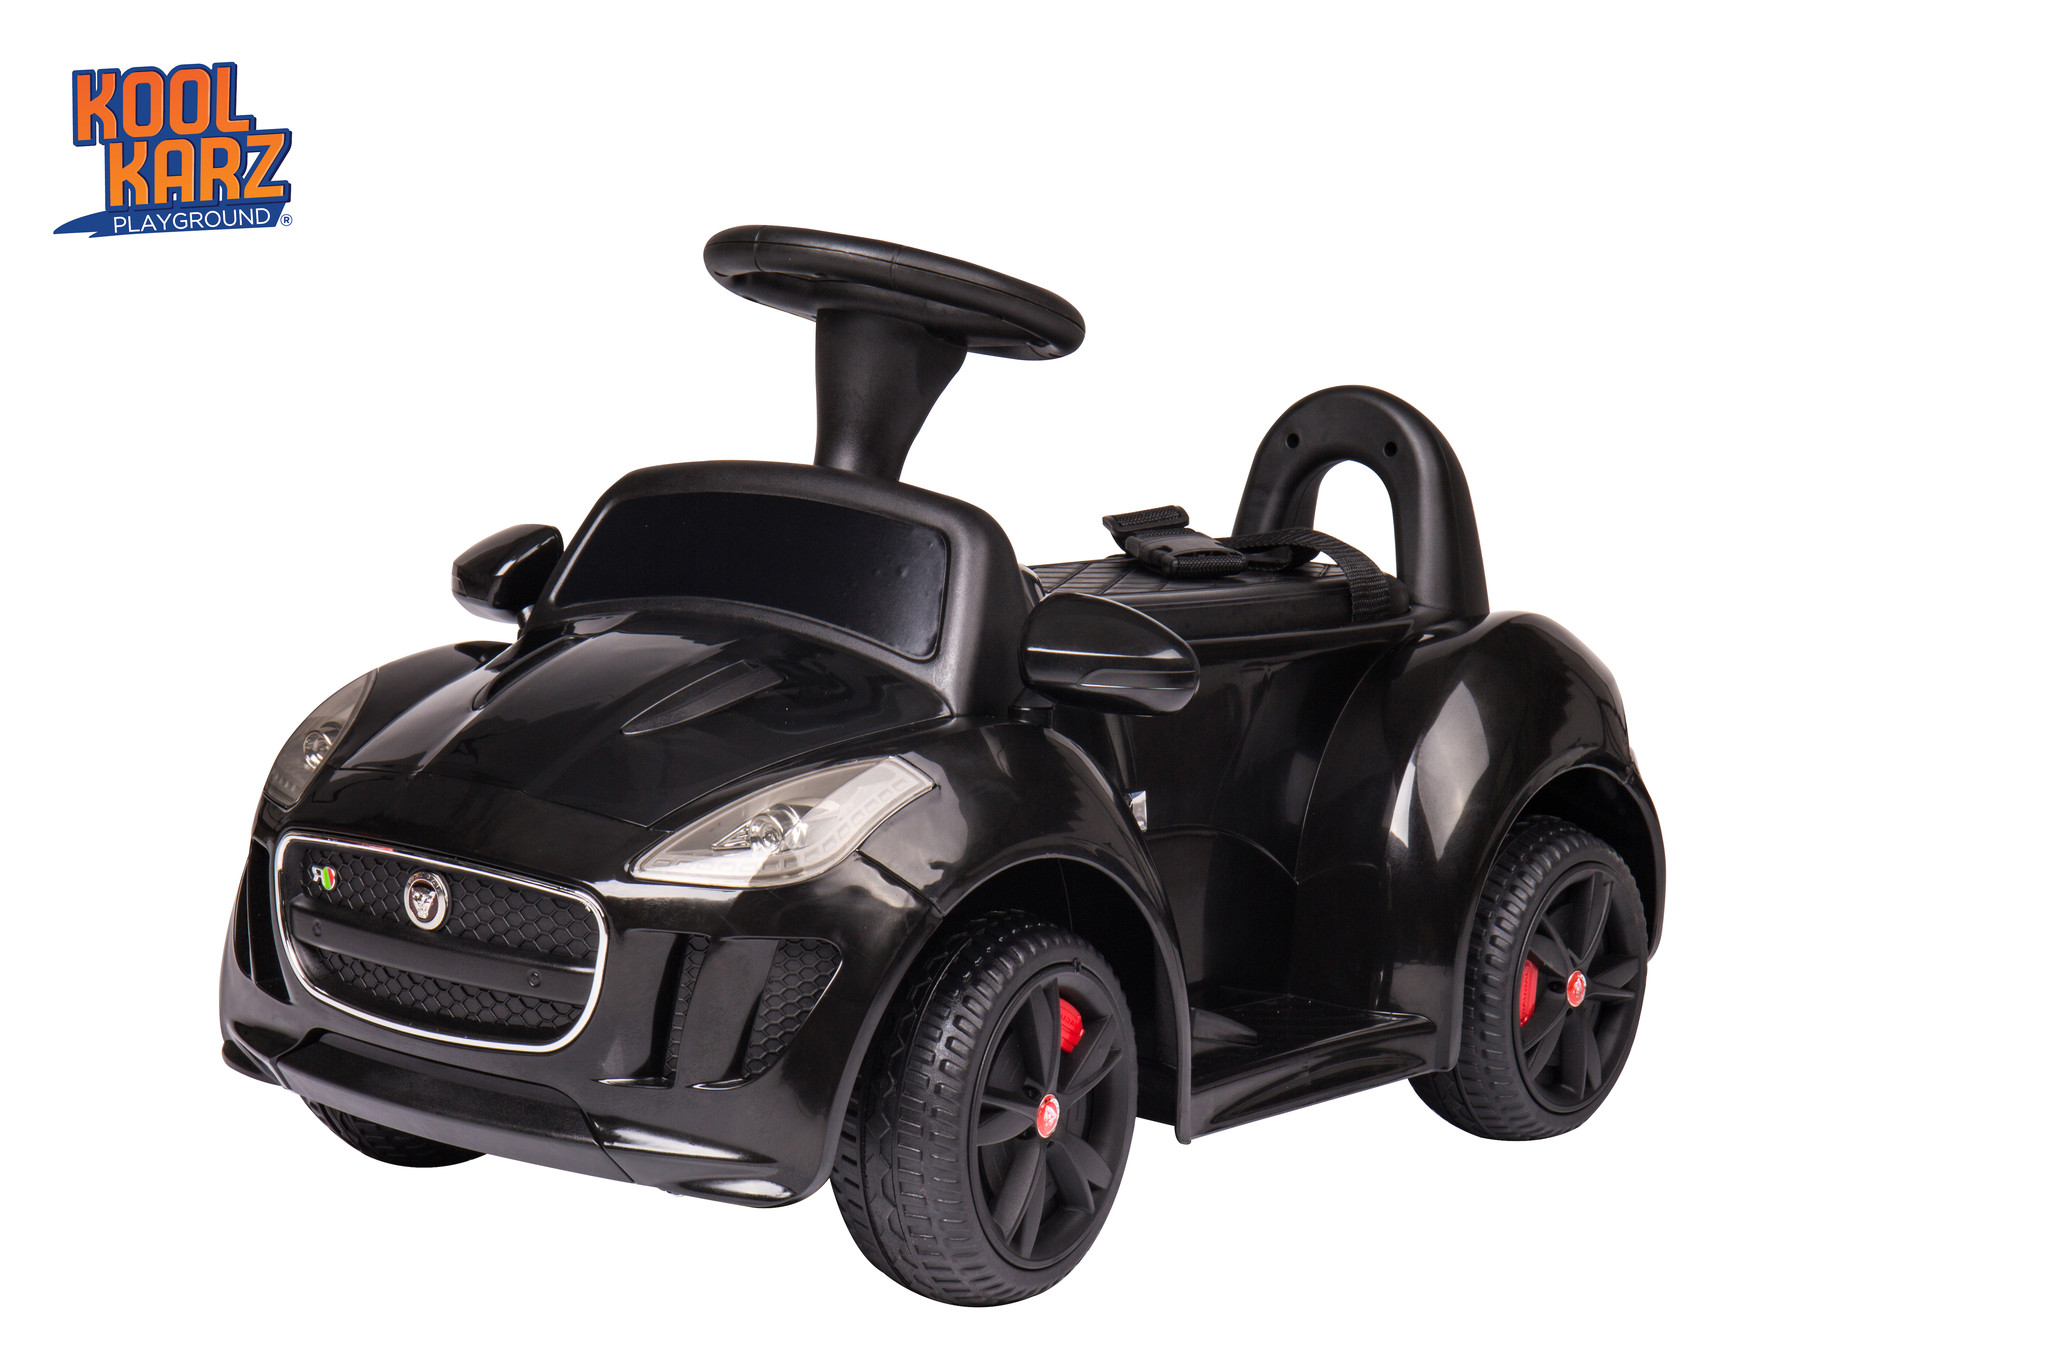 Kool Karz®Jaguar F-TYPE Electric Ride On Toy Car – Kool Karz Playground